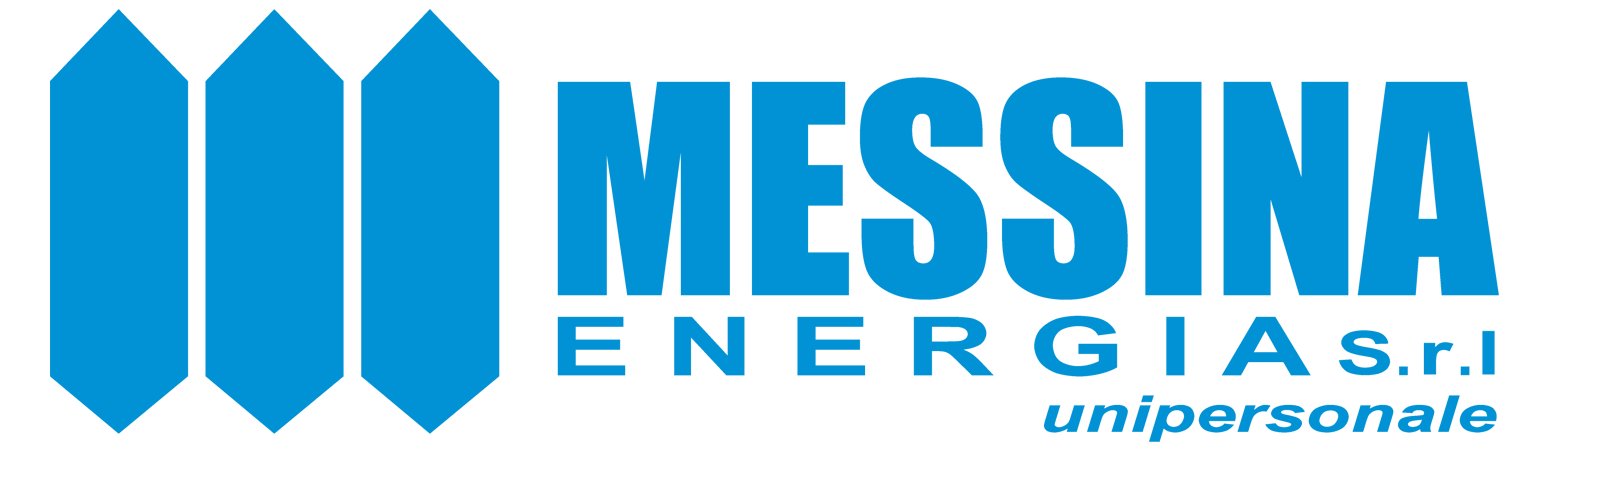 logo_messinaenergia_cel